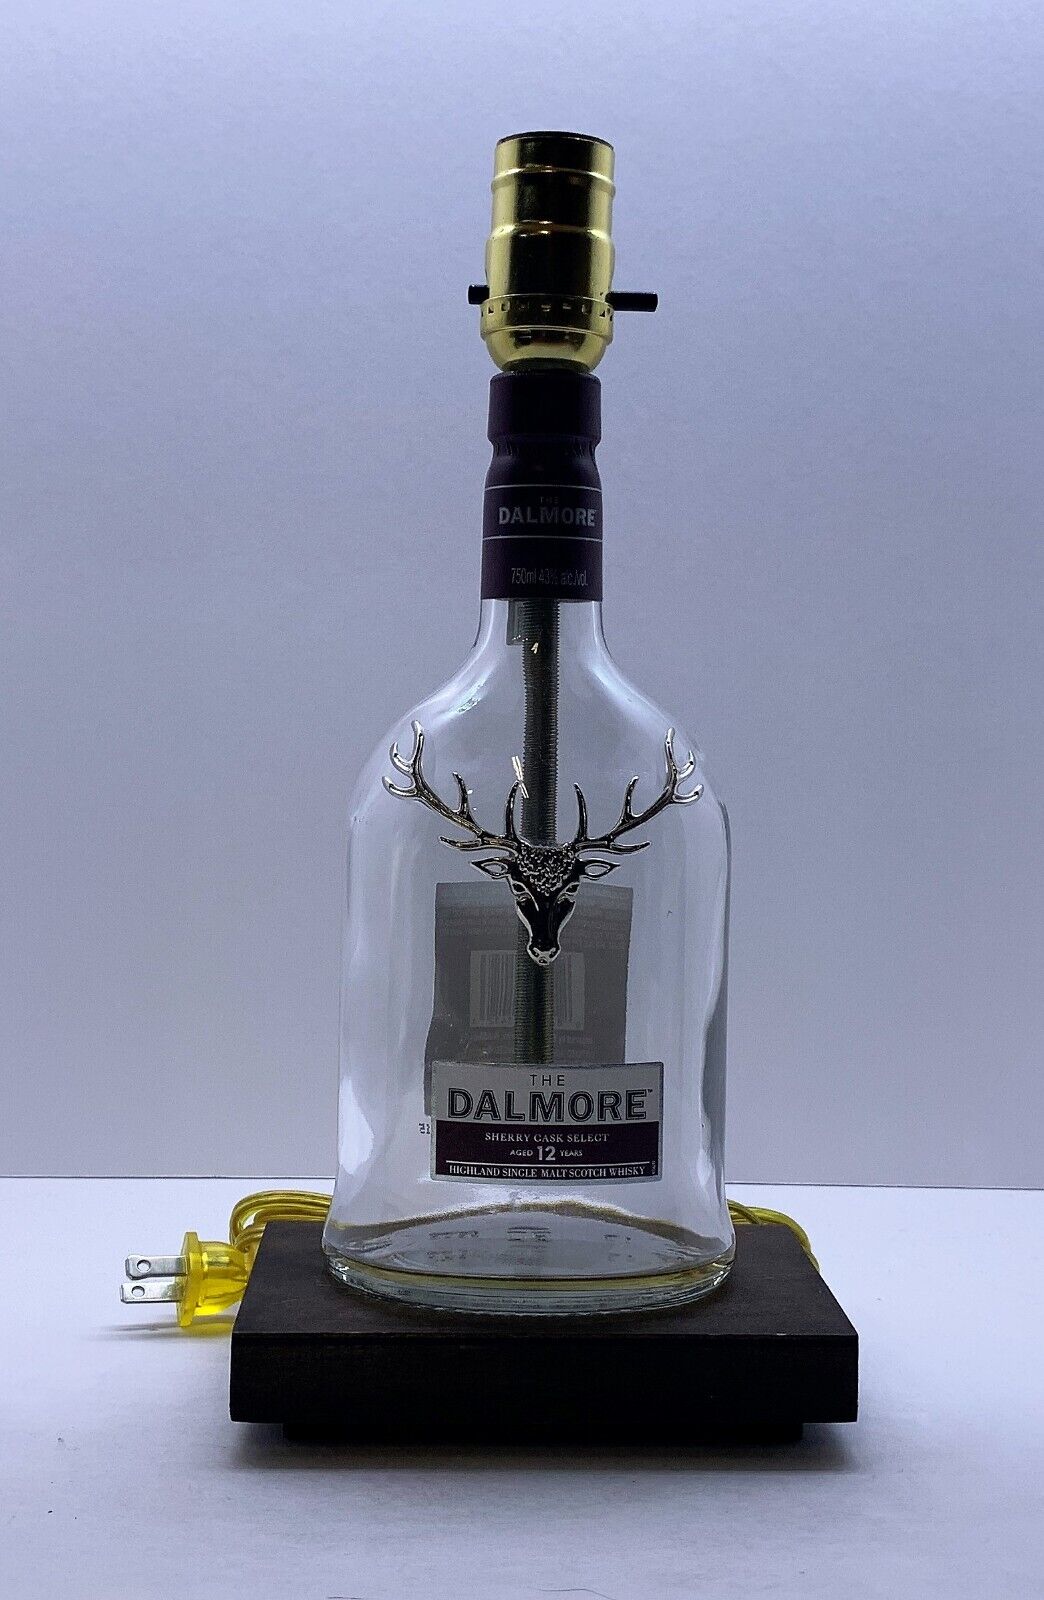 The Dalmore Malt Scotch Whiskey Liquor Bottle TABLE LAMP LIGHT with Wood Base